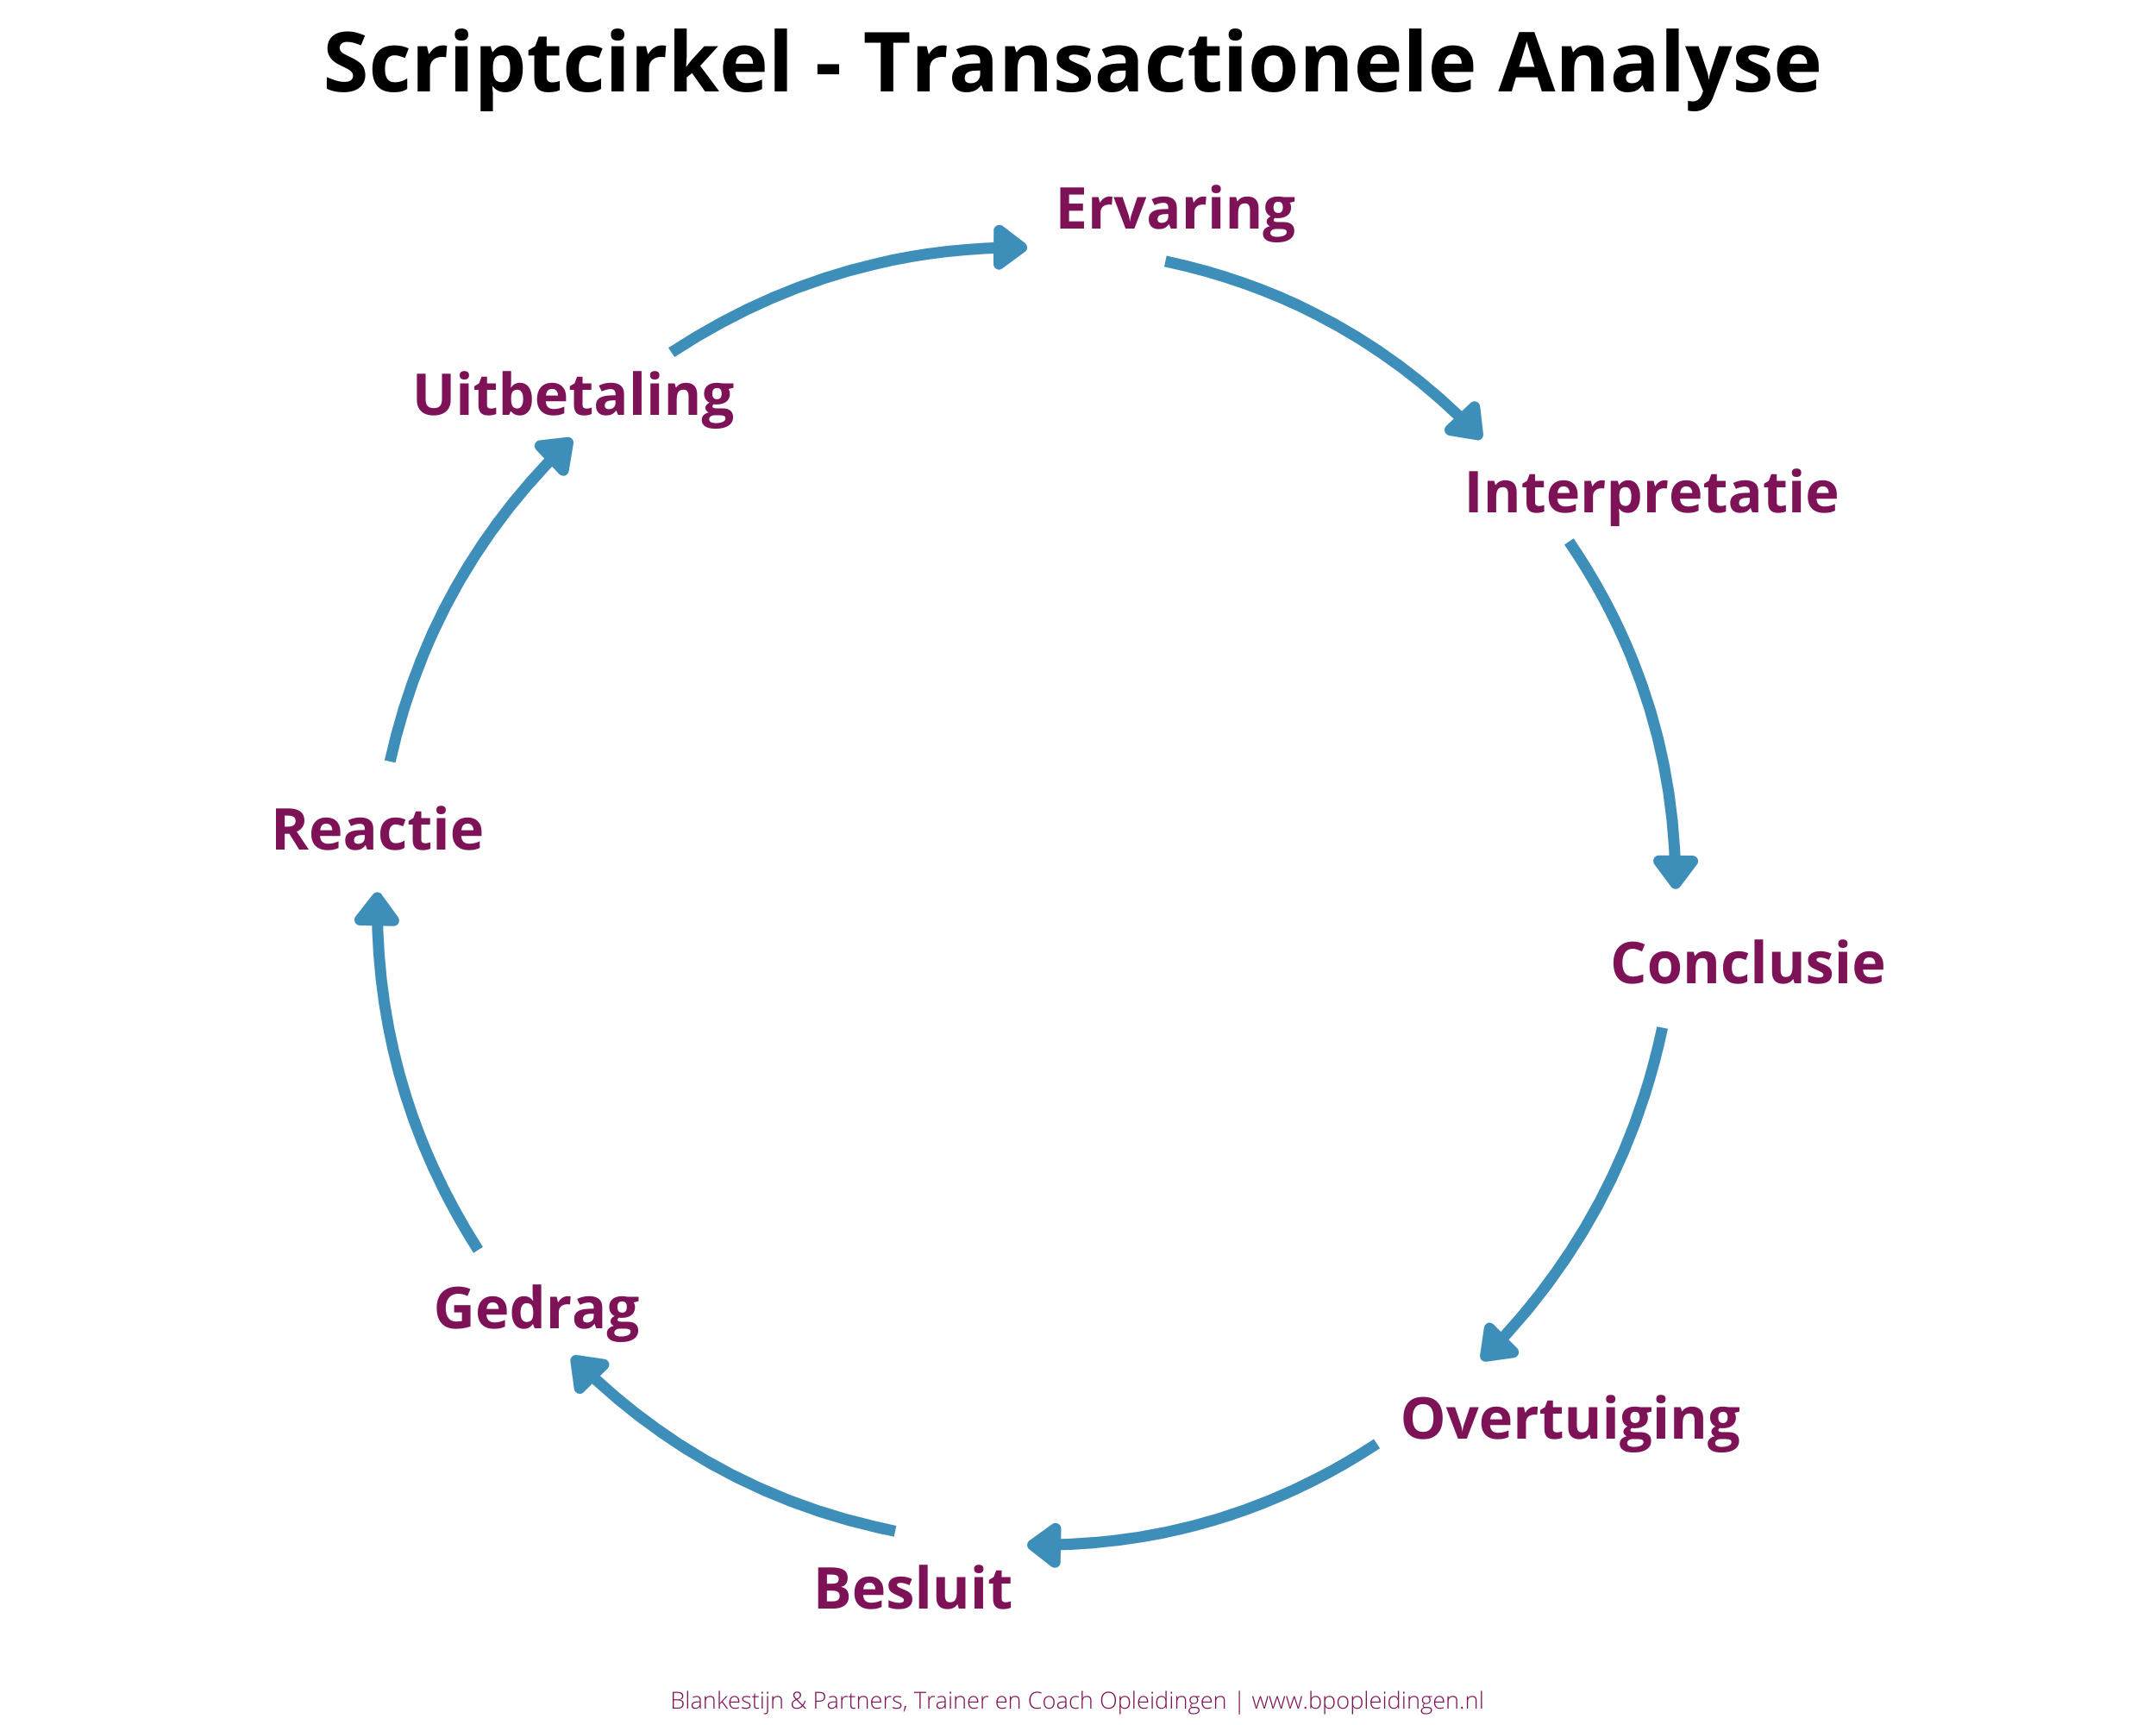 Scriptcirkel - Transactionele Analyse